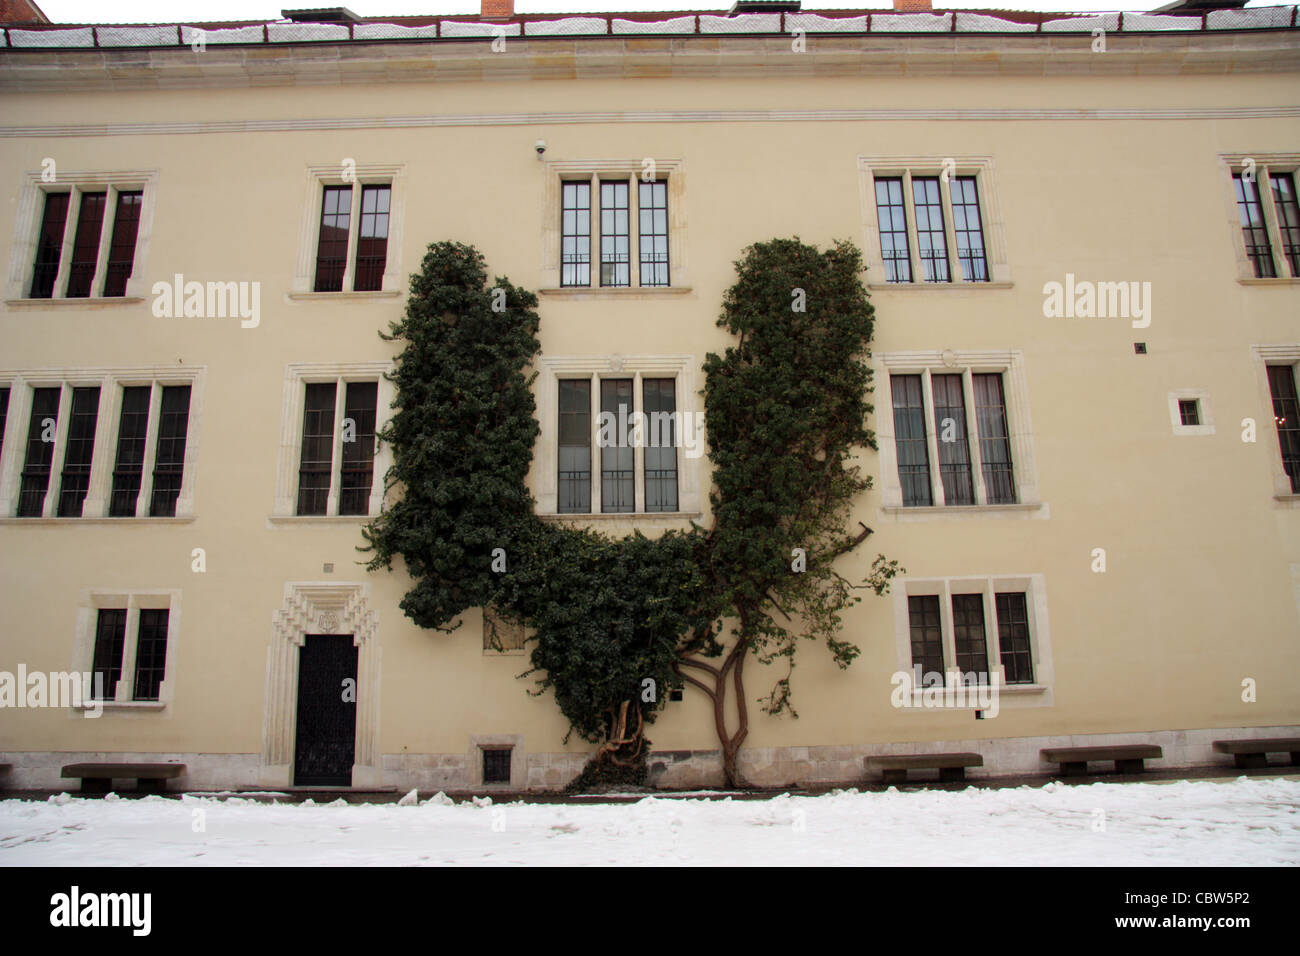 Wawel, Royal, Castle, inner, courtyard, Renaissance Stock Photo